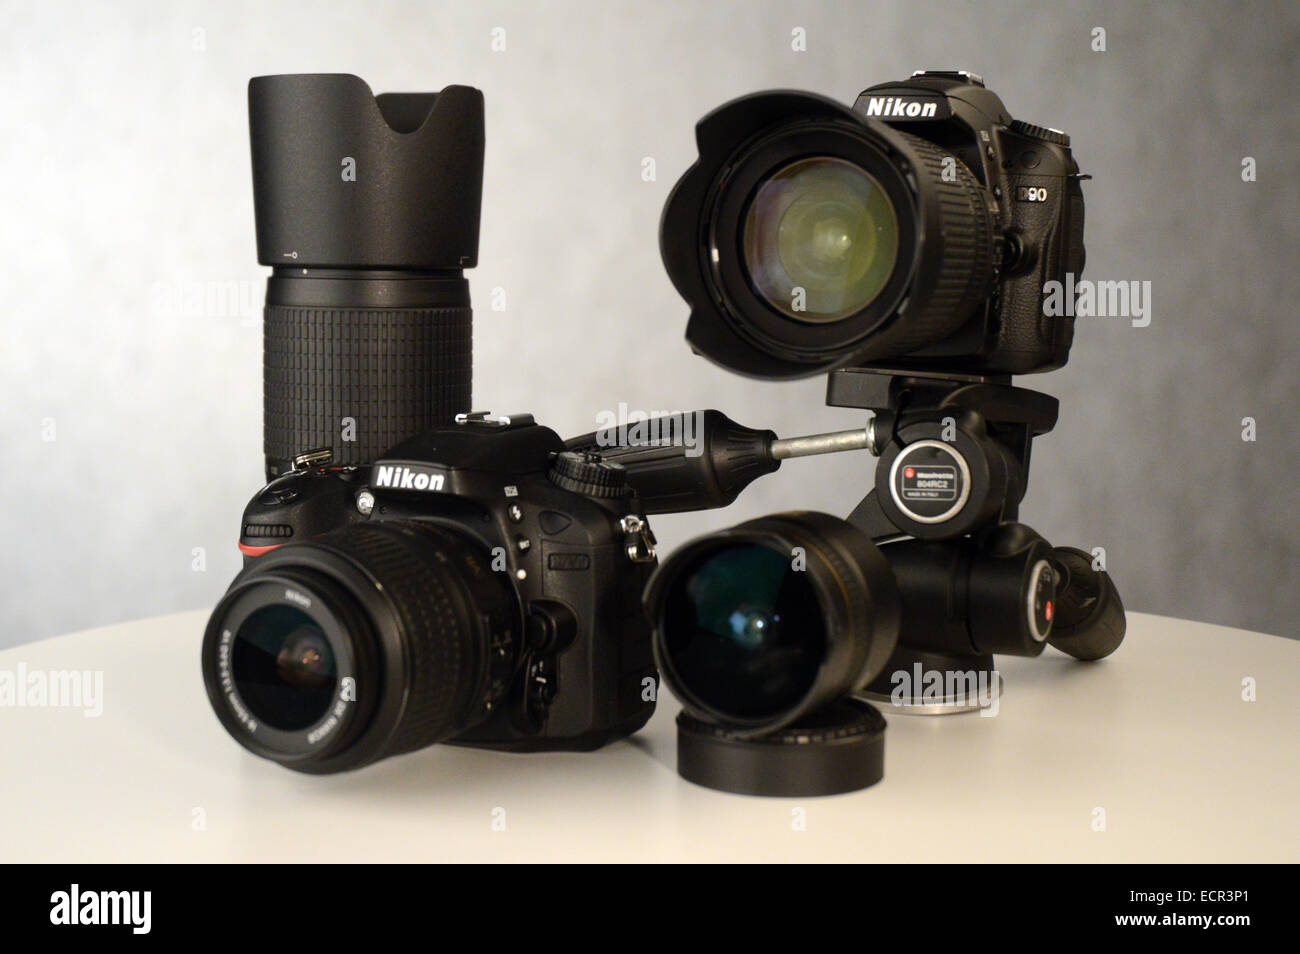 Cameras Nikon D90, Nikon d7000, lenses Stock Photo